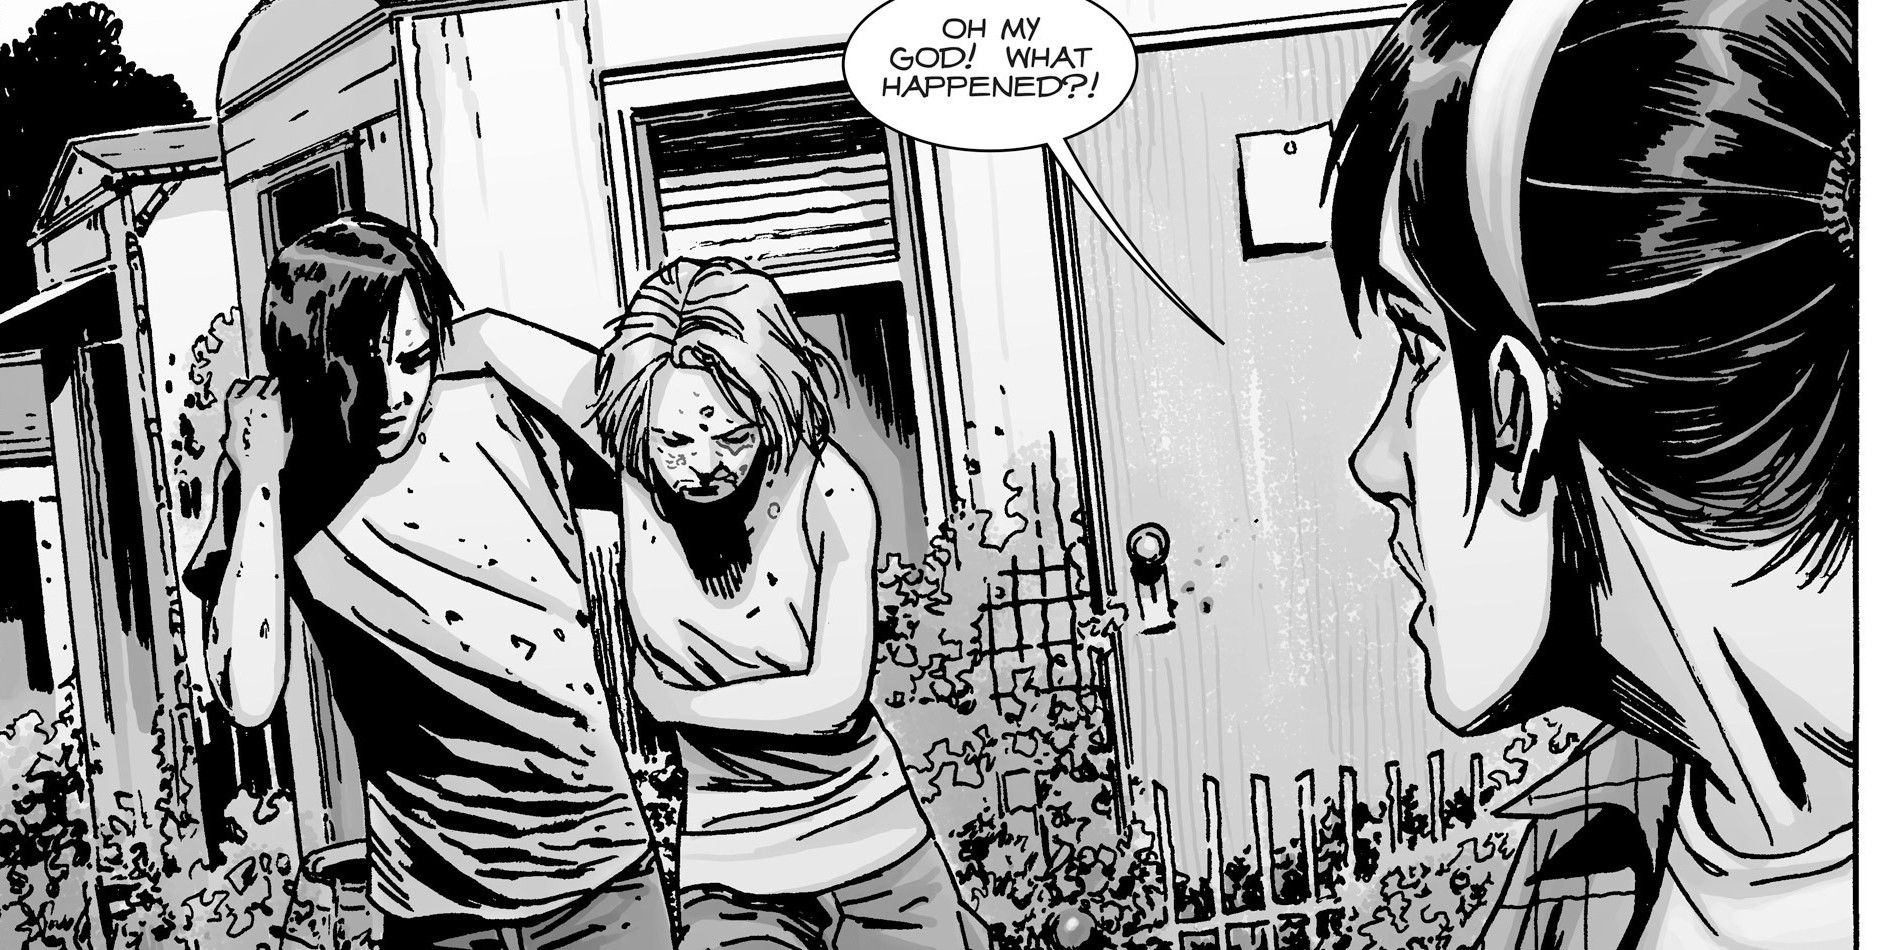 Carl Grimes and Sophia in The Walking Dead comic